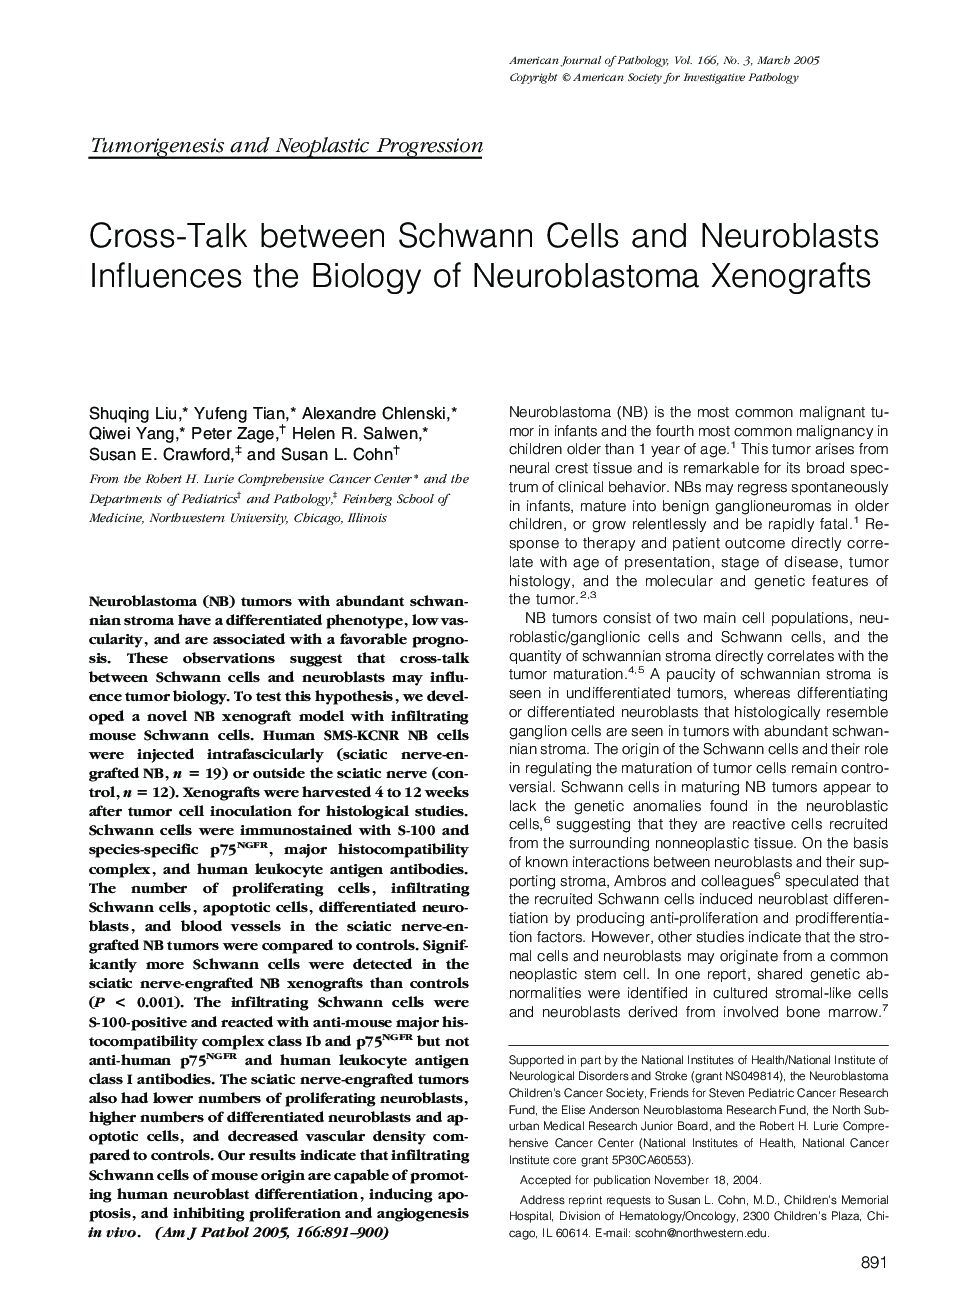 Cross-Talk between Schwann Cells and Neuroblasts Influences the Biology of Neuroblastoma Xenografts